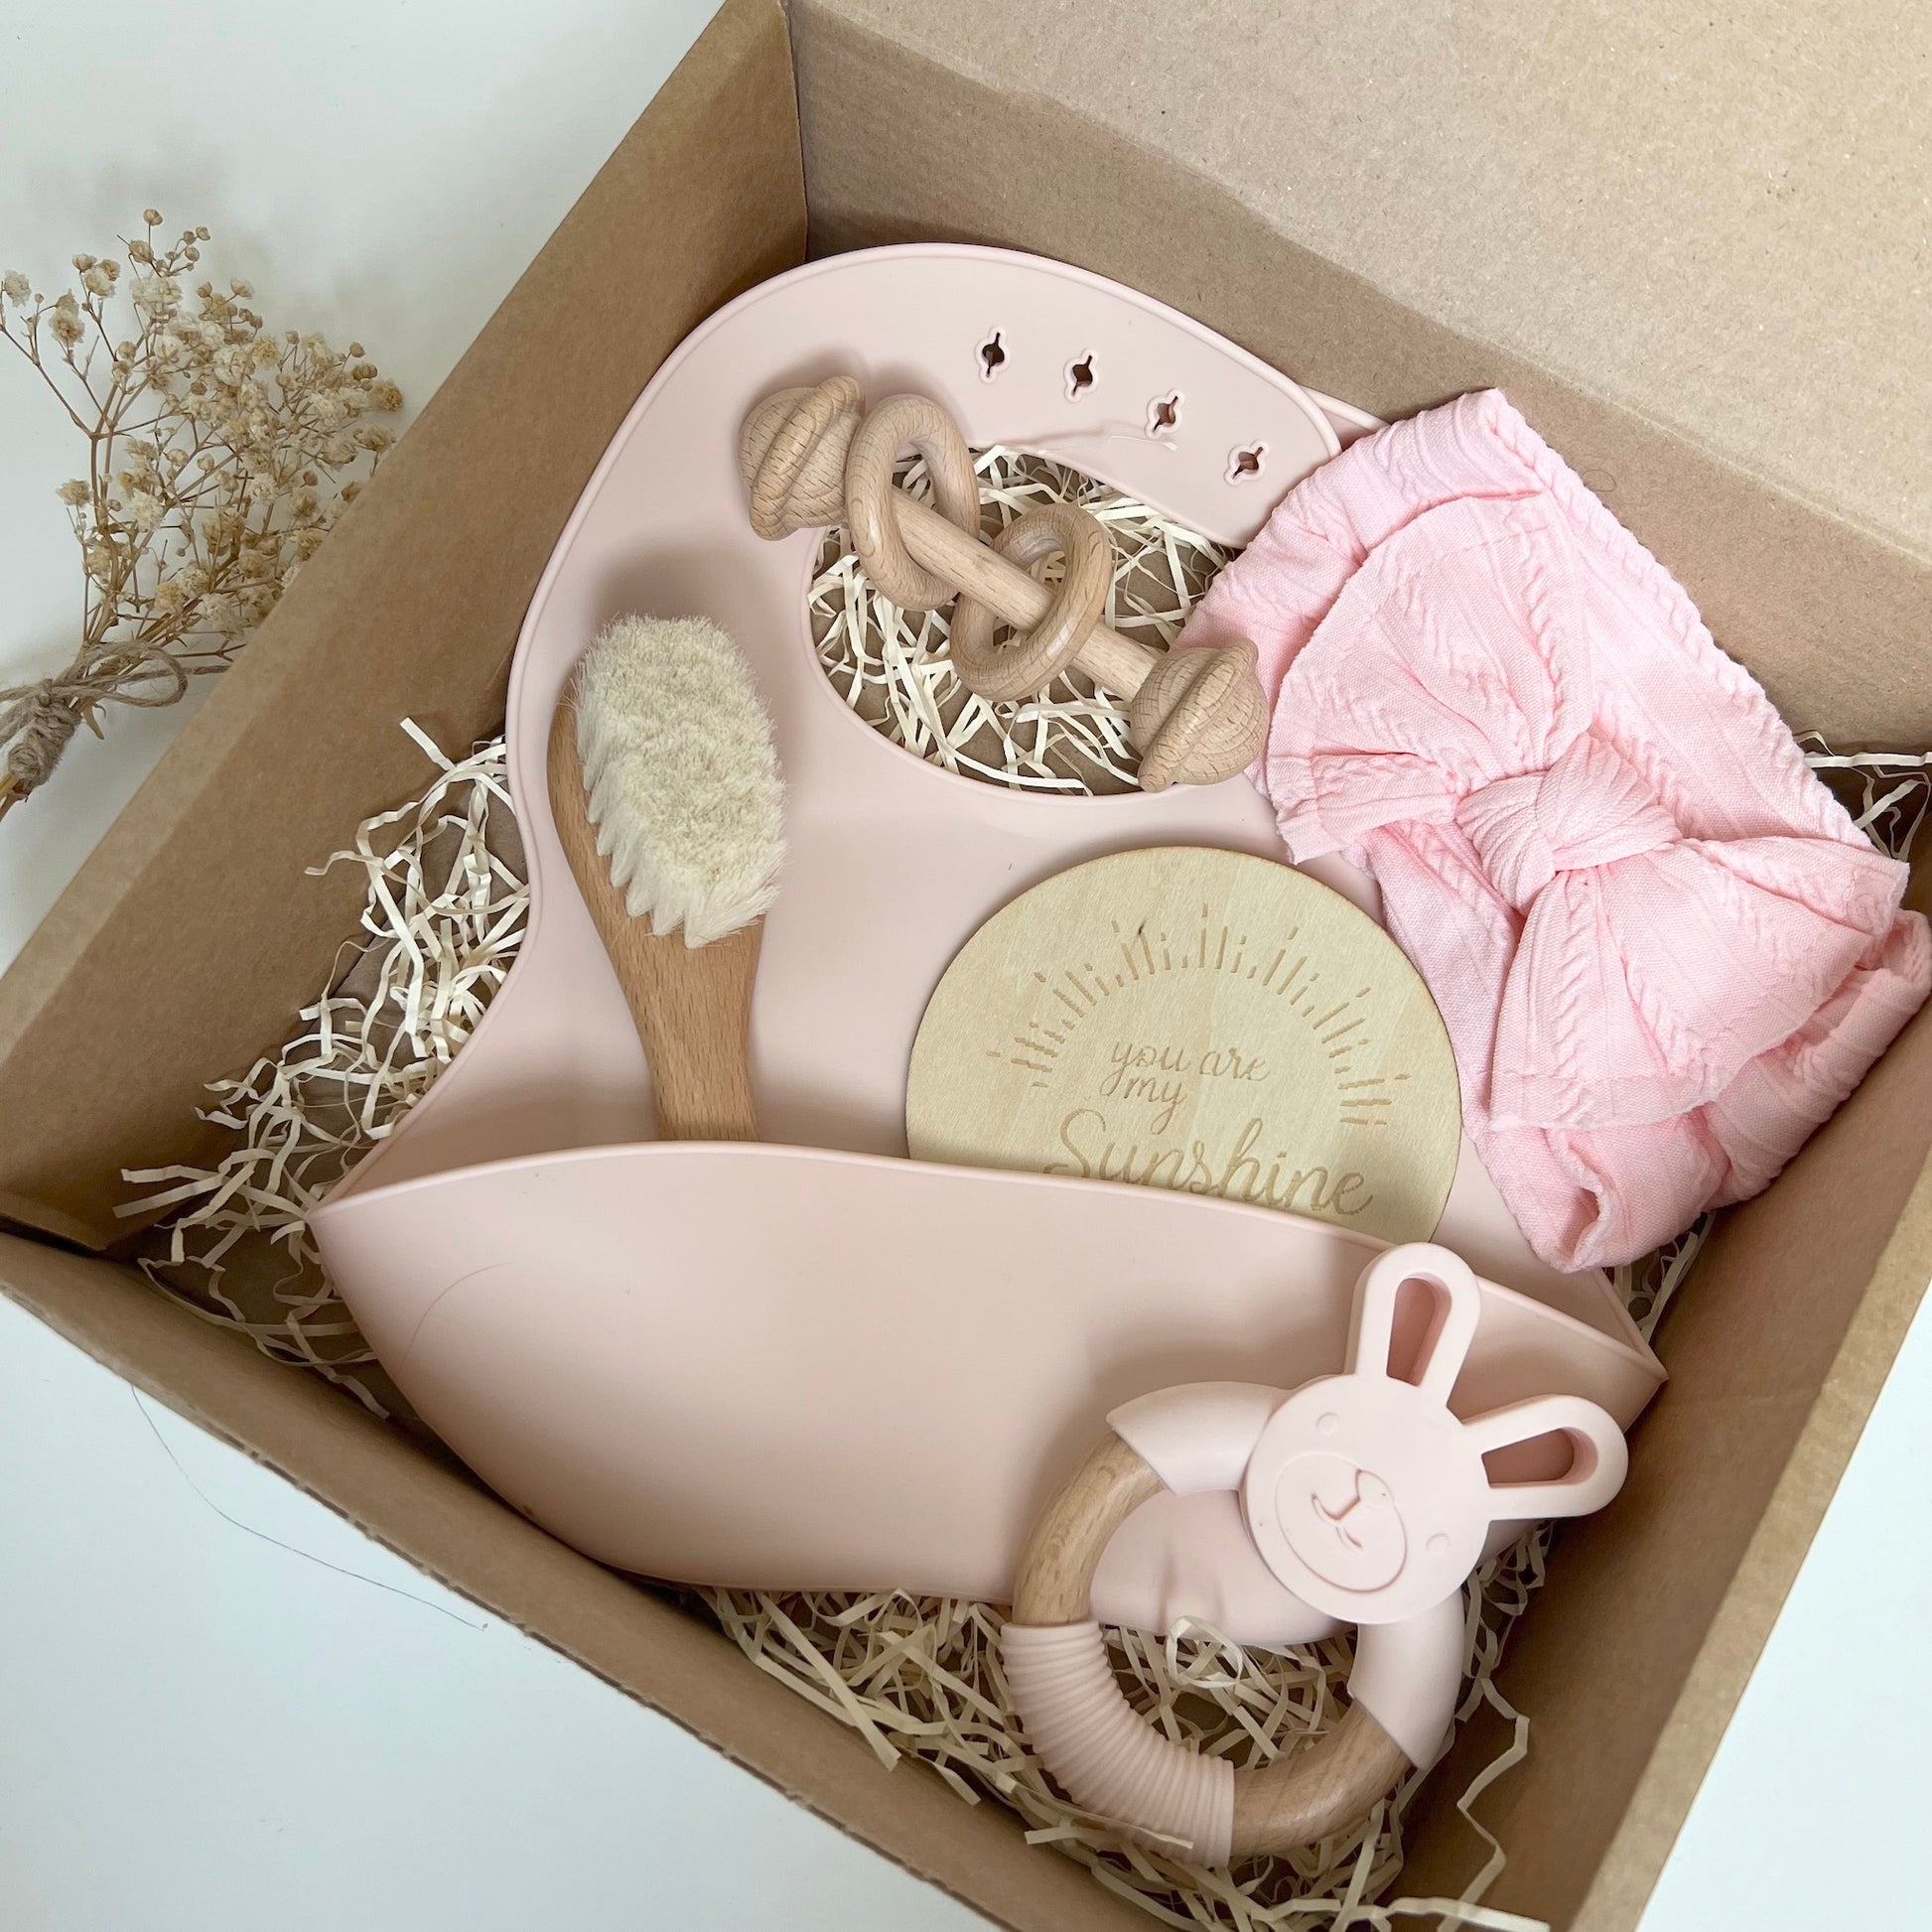 Newborn Baby Gift Set for Girls - Baby Shower Gifts, Baby Gift Box Set,  Baby Girl Gifts, Baby Welcome Box, Newborn Gift Set with Essential Baby  Items